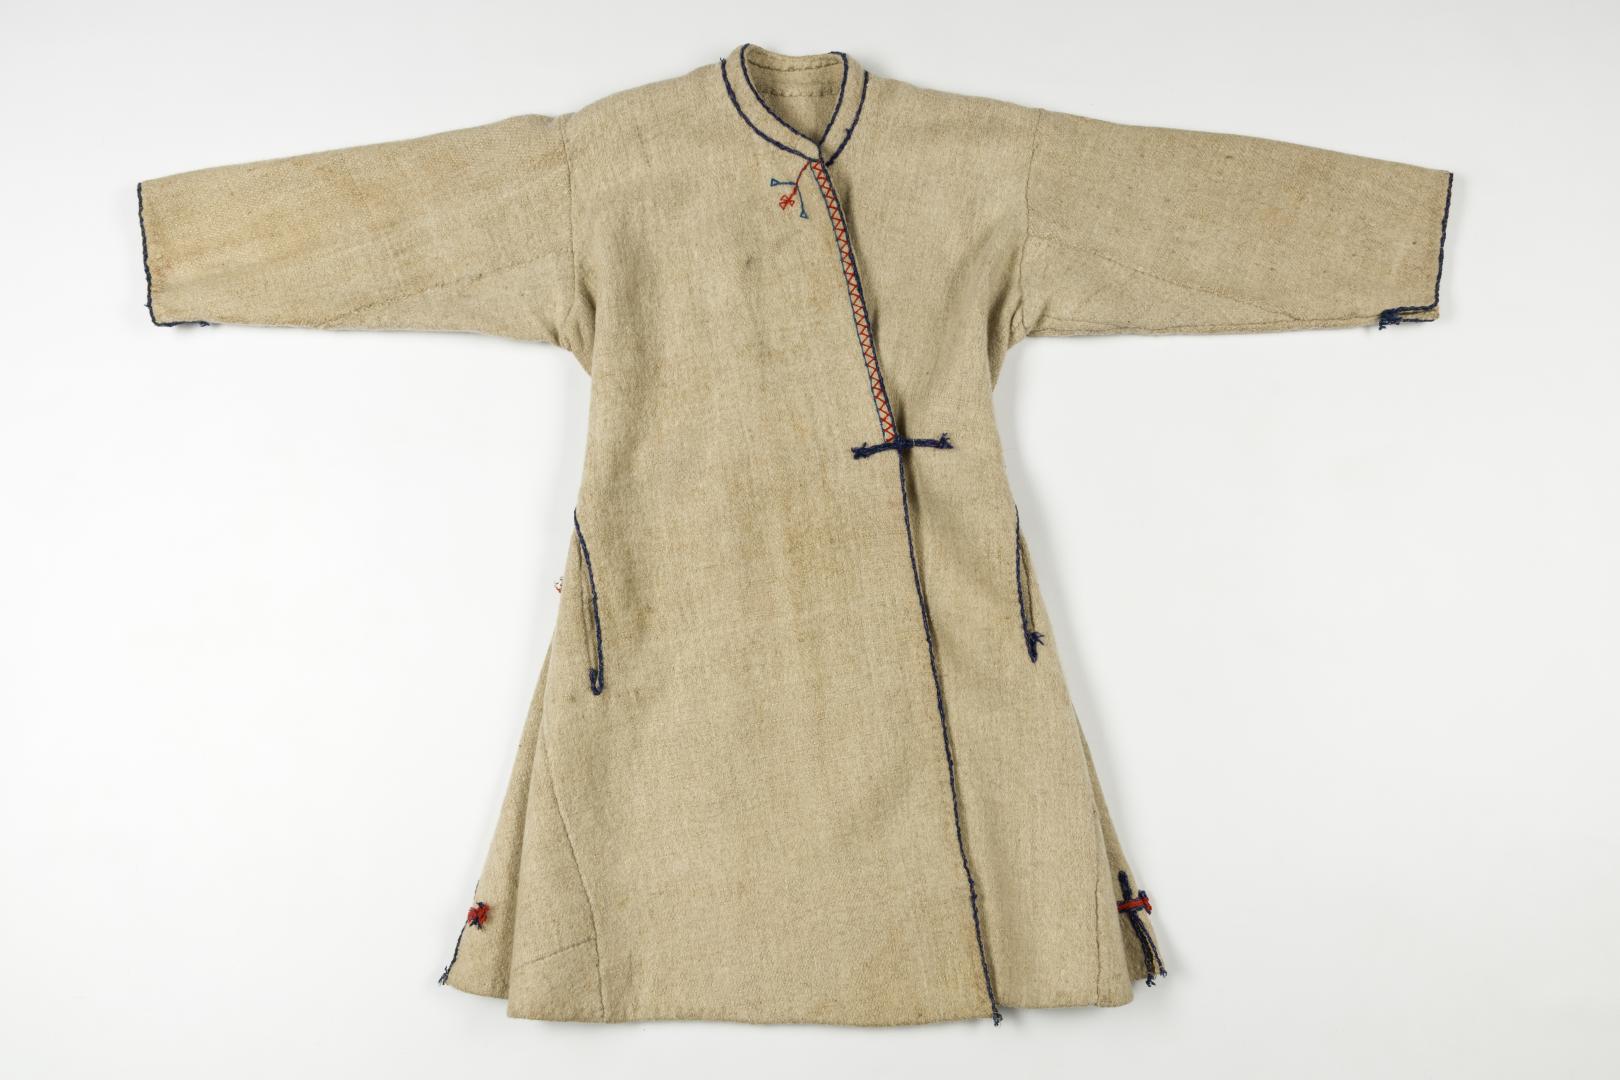 Svyta (women's coat made of white cloth)